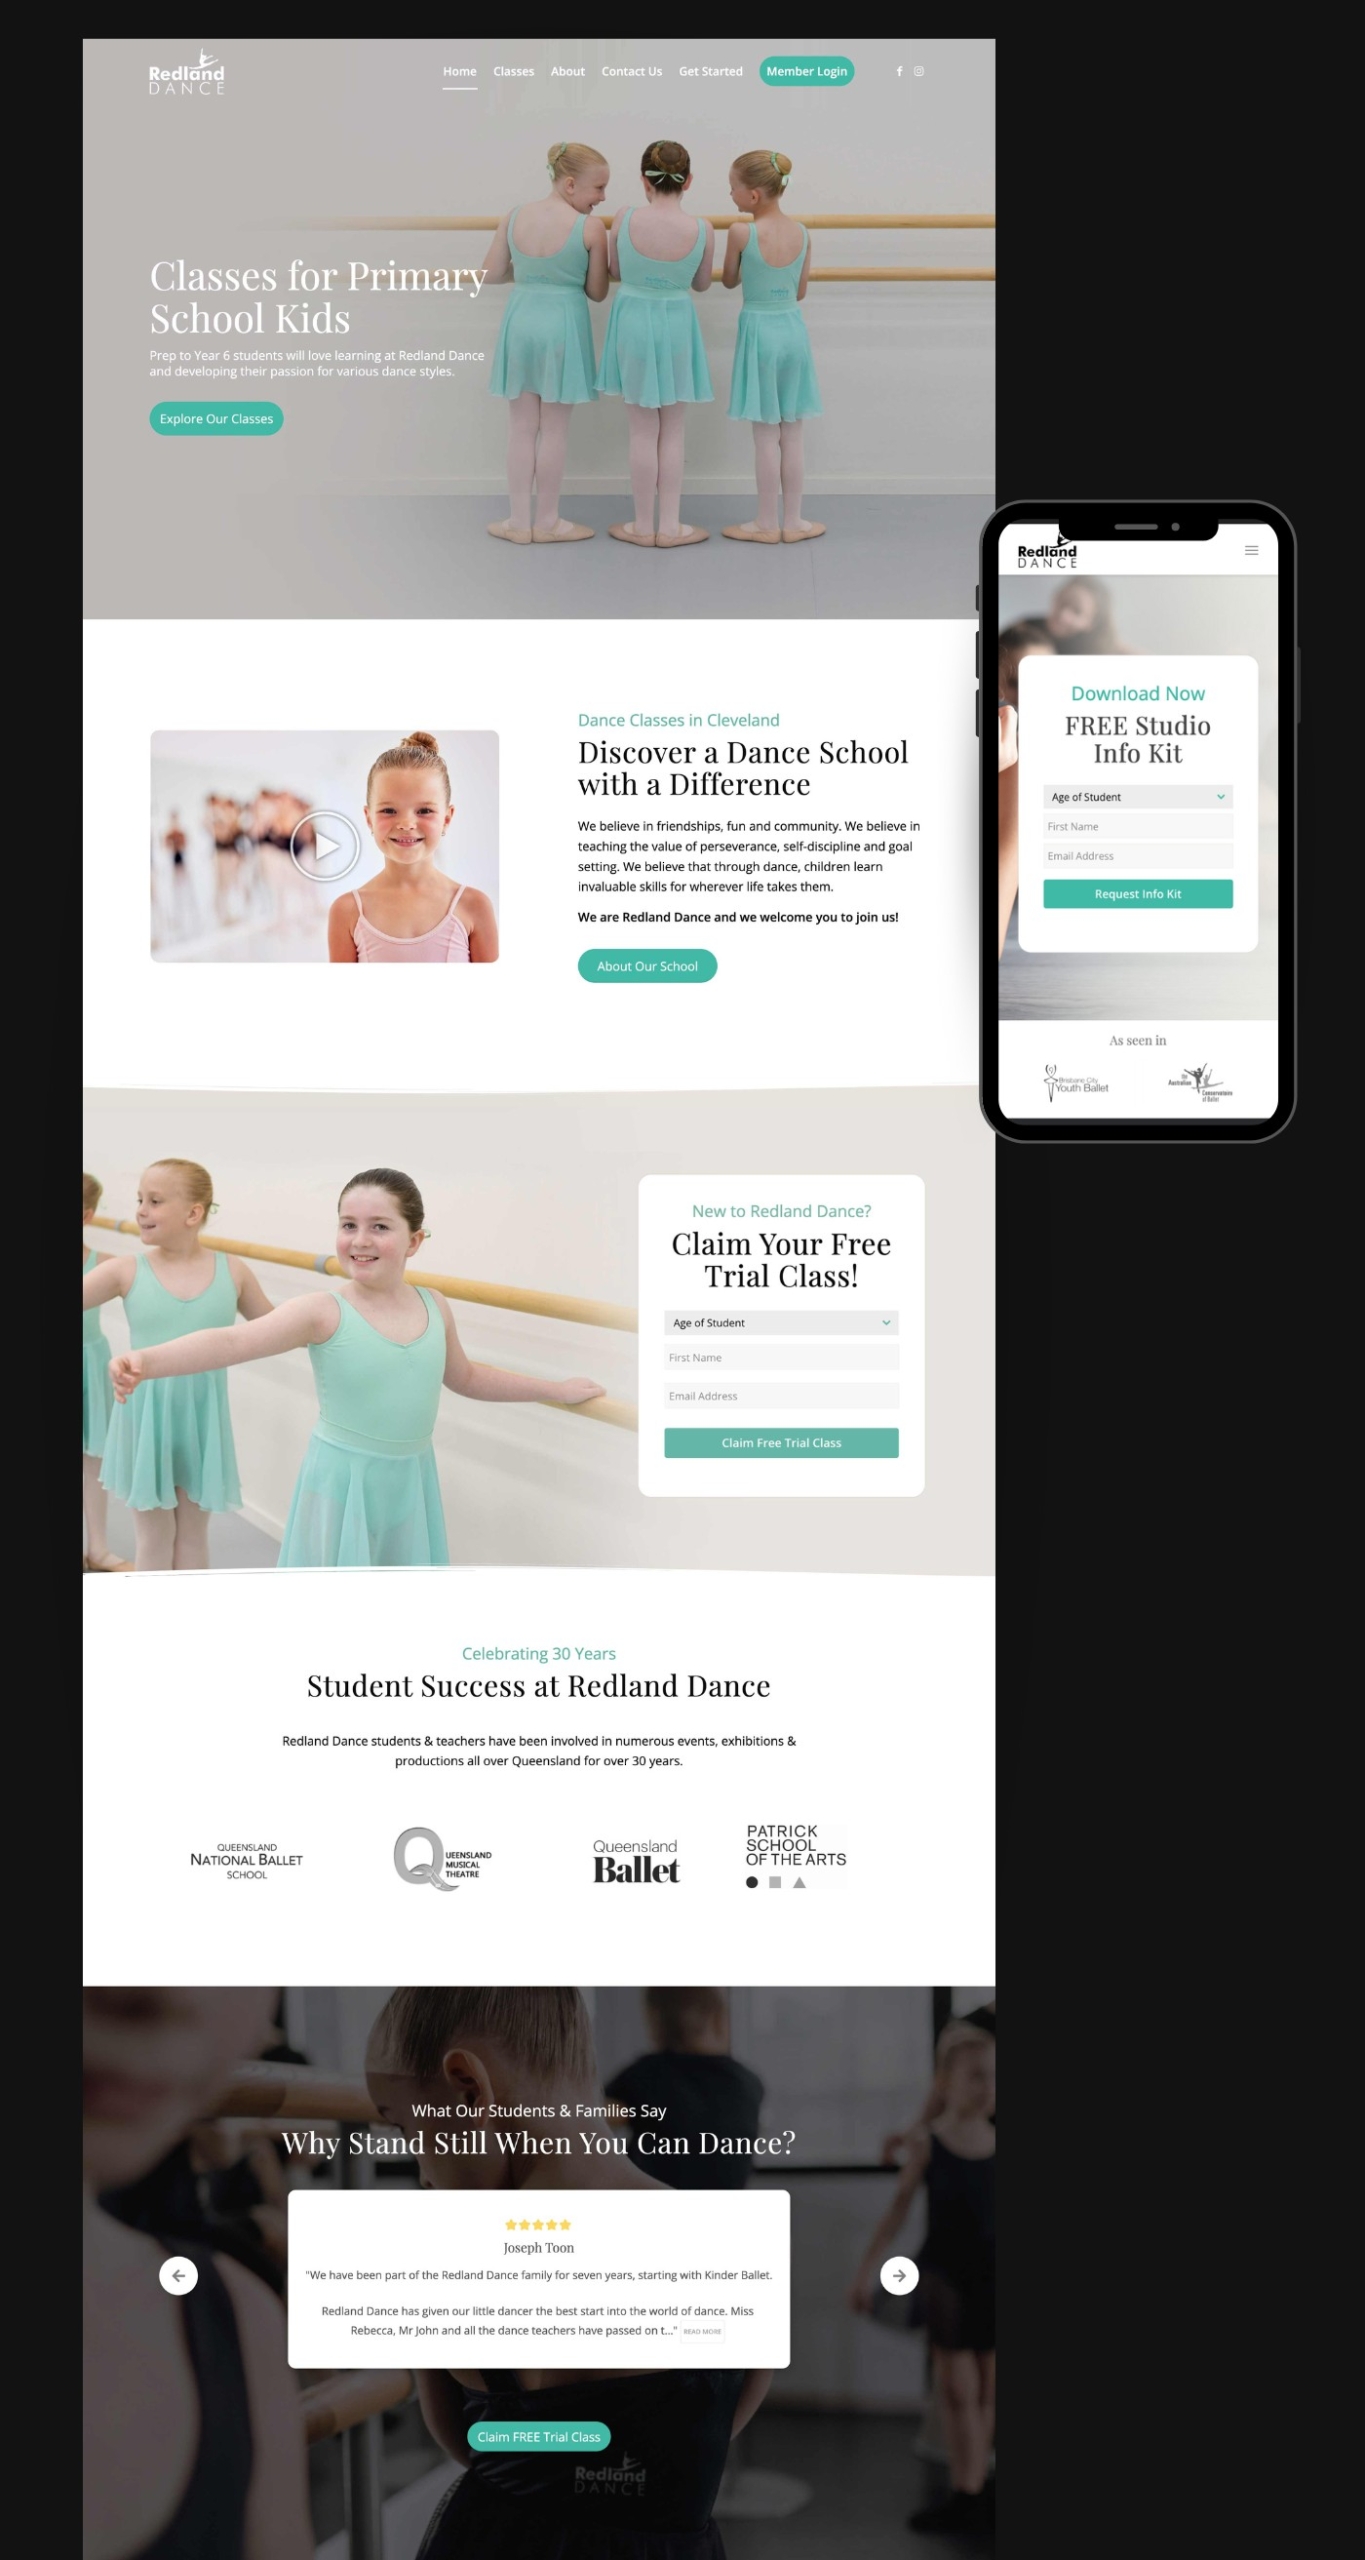 Dance Studio Marketing & Web Design Australia - Done Digital Brisbane